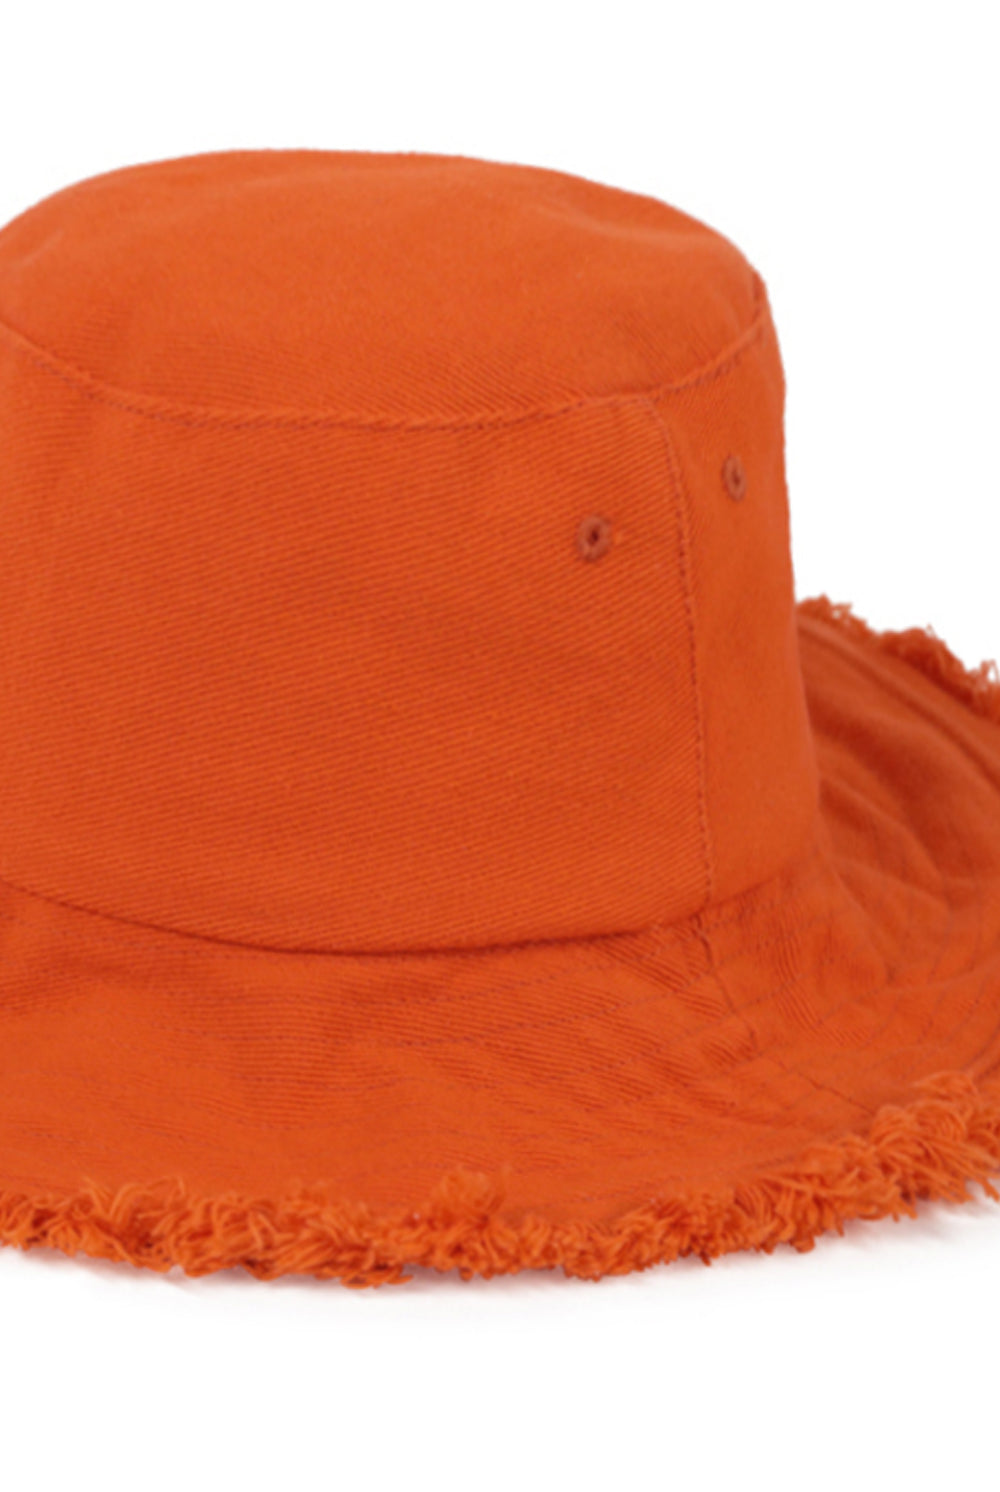 My Accessories London Frayed Edge Bucket Hat in Orange | Beach | Holiday | Summer | Distressed | Frayed | Bright | Festival Hat | Ladies Hat| Women's Accessories